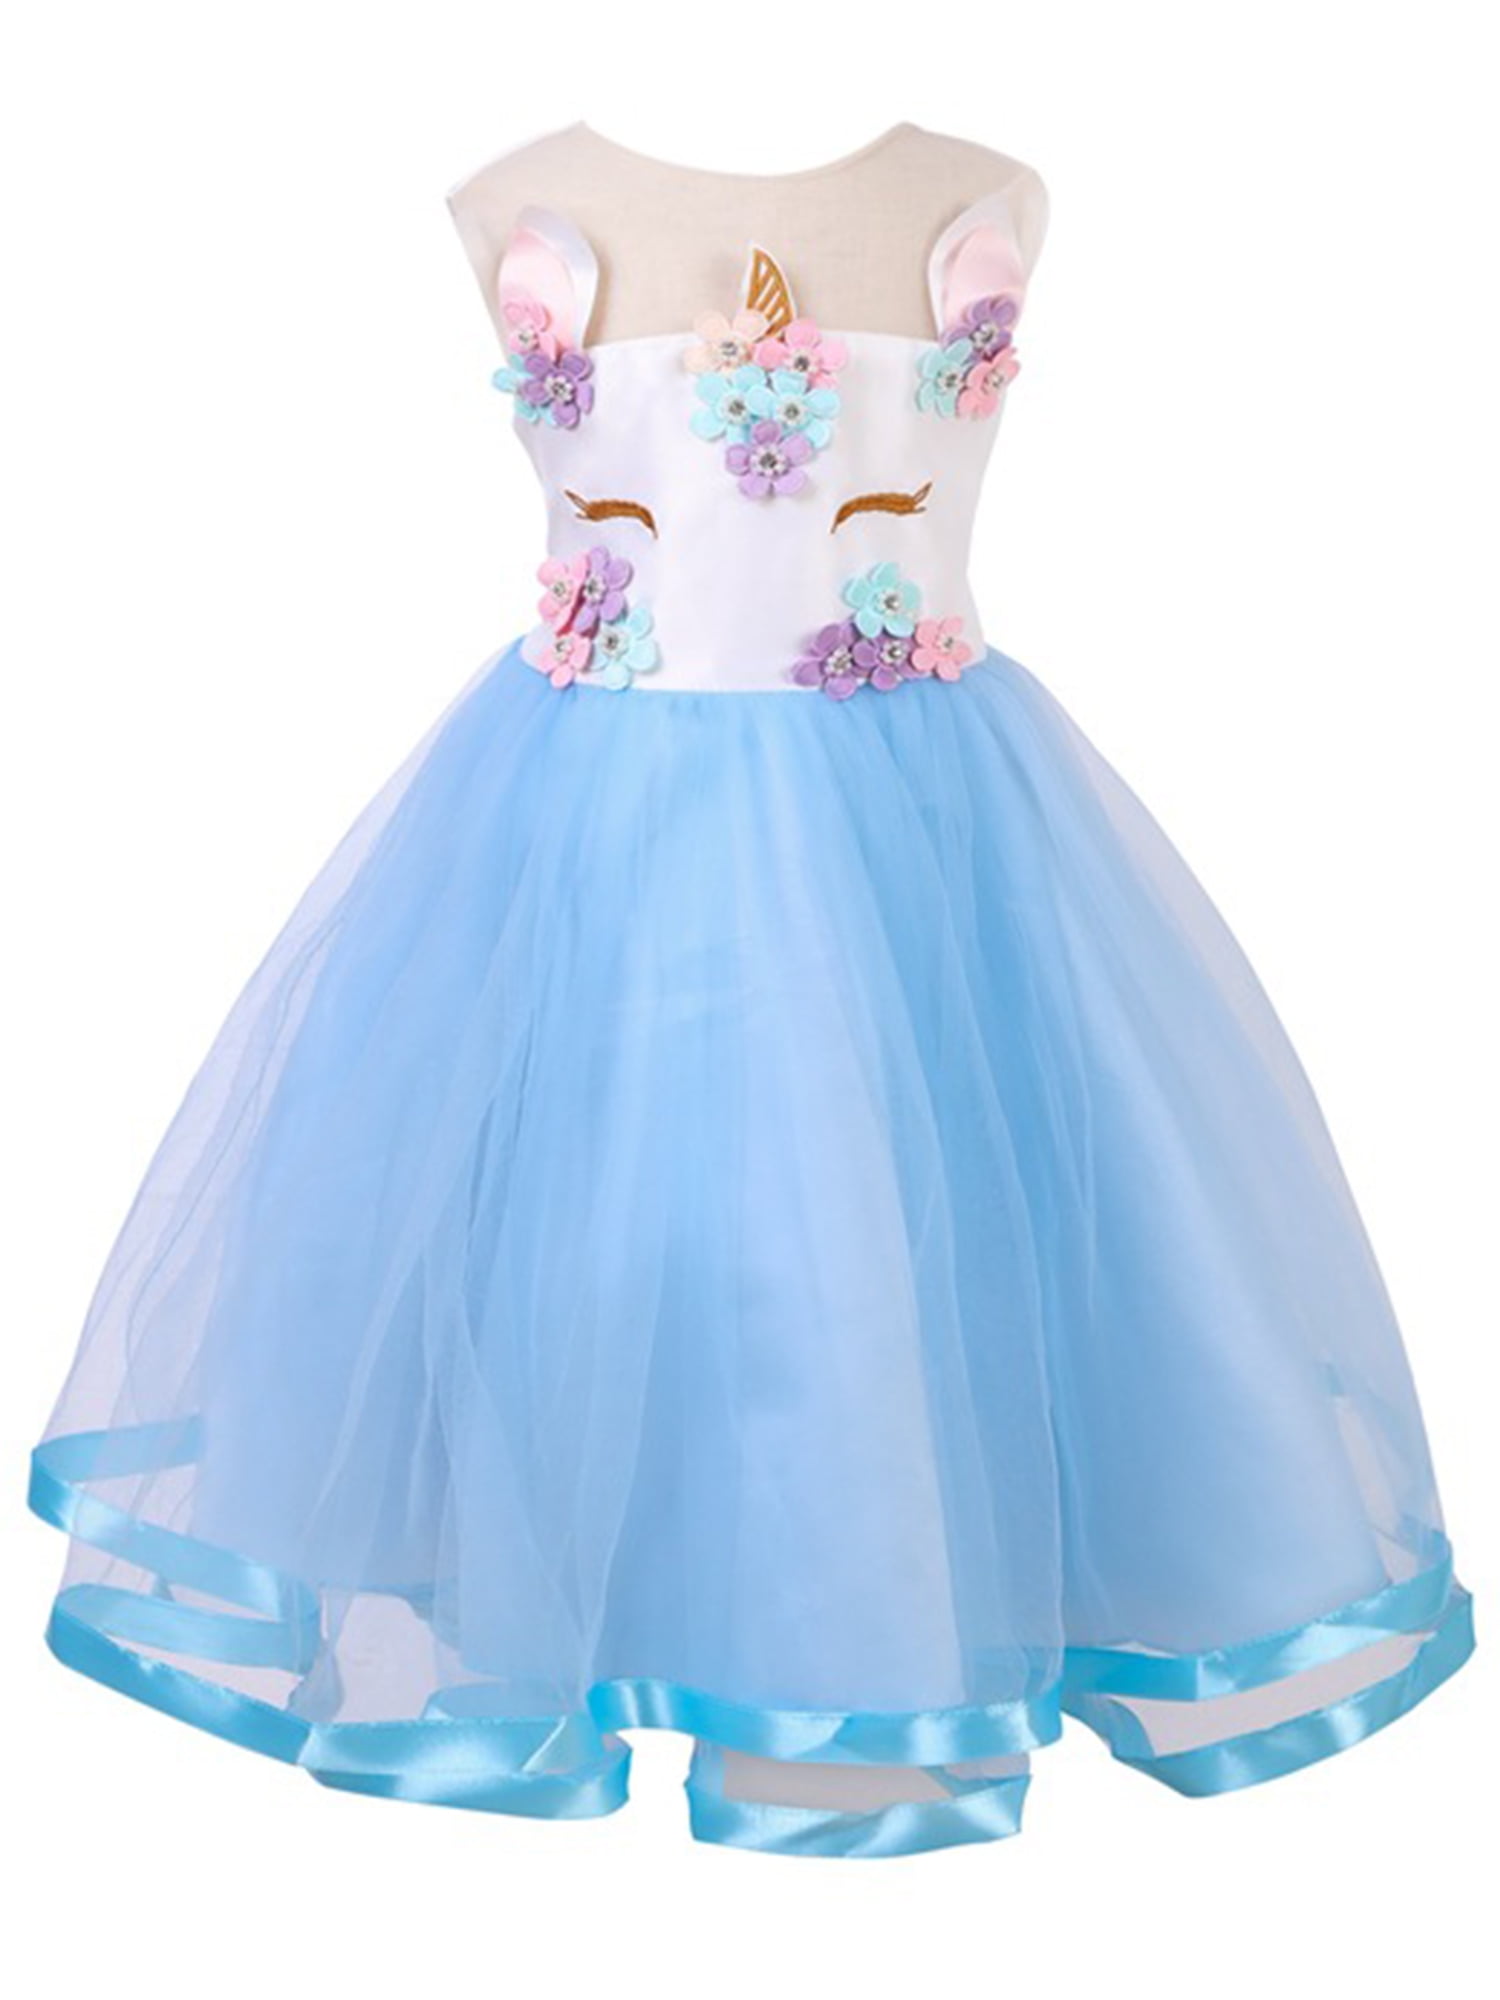 Flower Girls Baby Dress Sheer Mesh Tutu Gown Wedding Party Birthday Tulle Skirt 